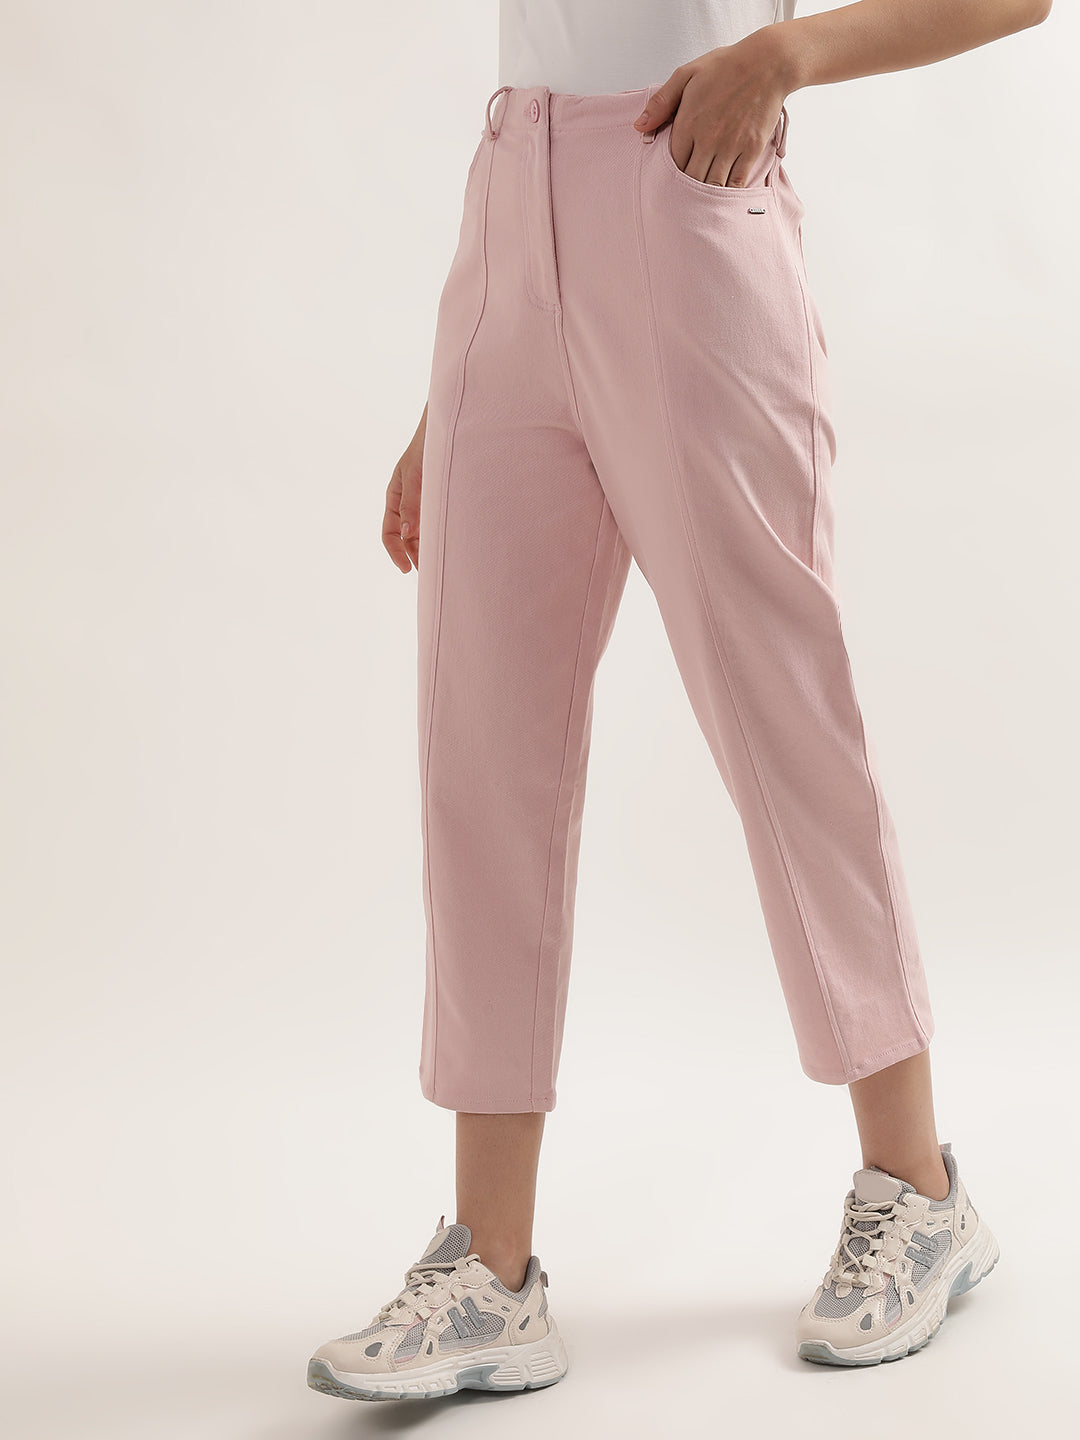 Elle Women Pink Solid Regular Fit Trouser